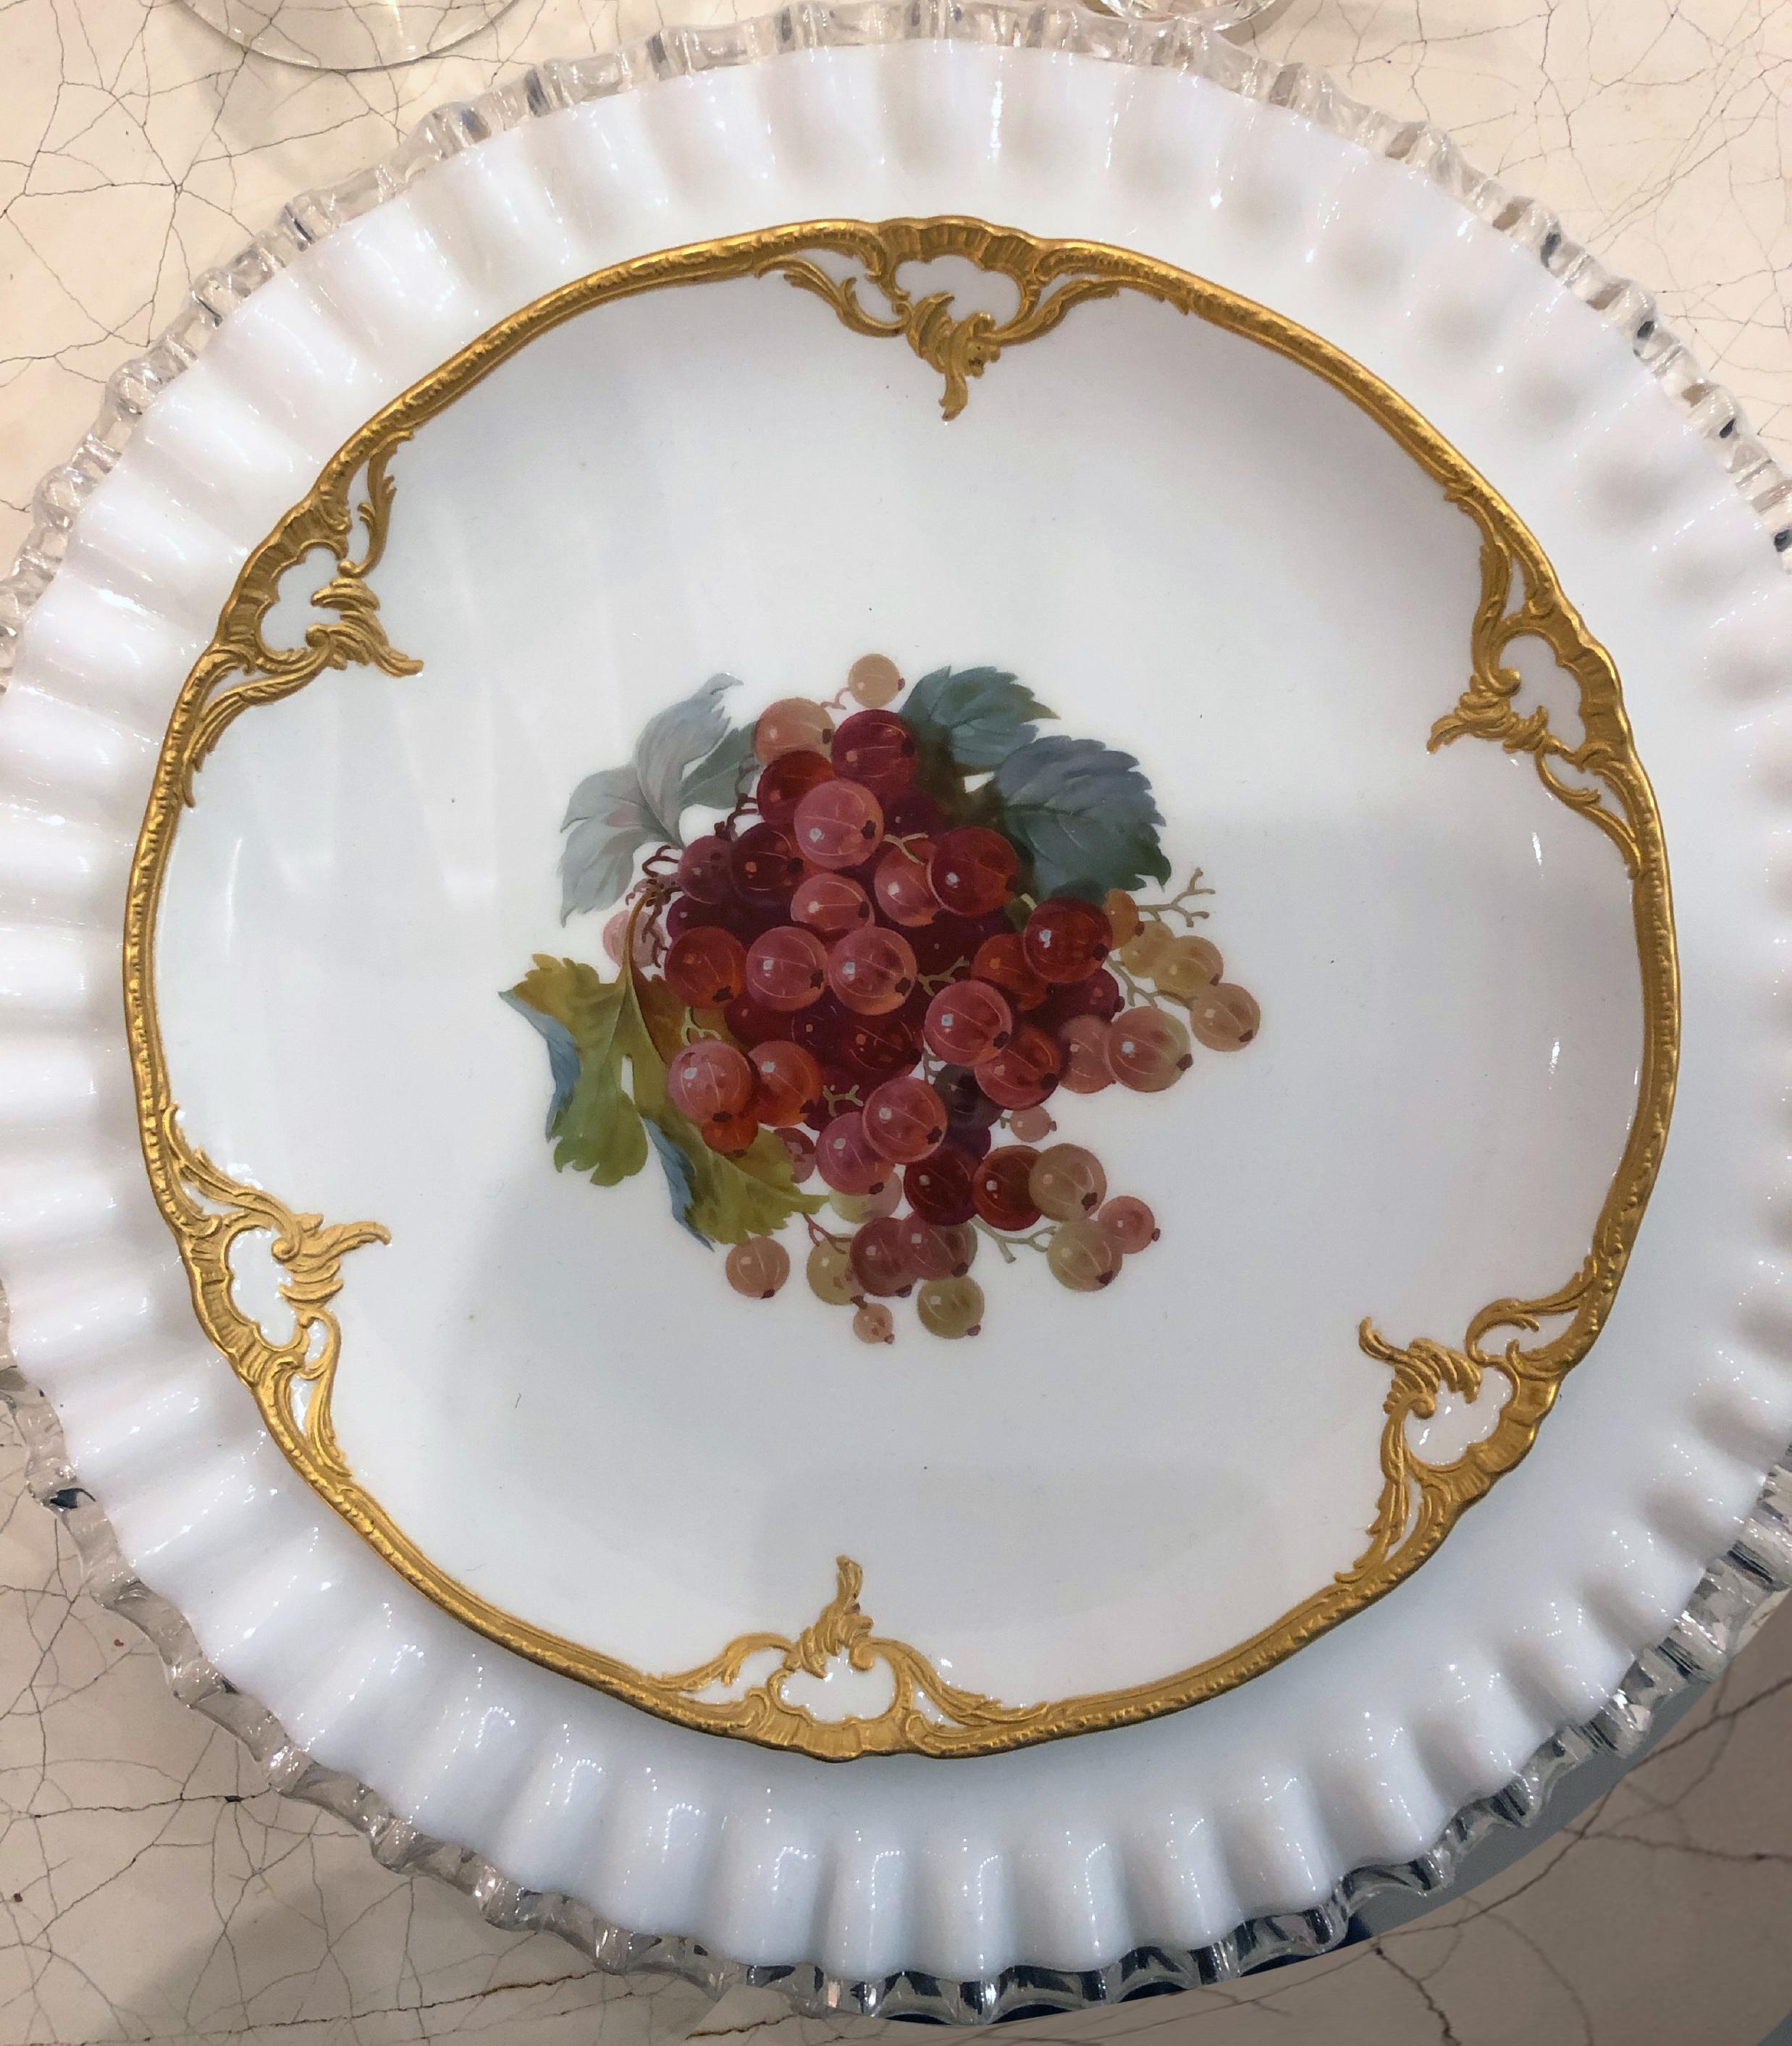 Set of Eight Porcelain Dessert Plates Depicting Fruit with 14k Gold Detail 4